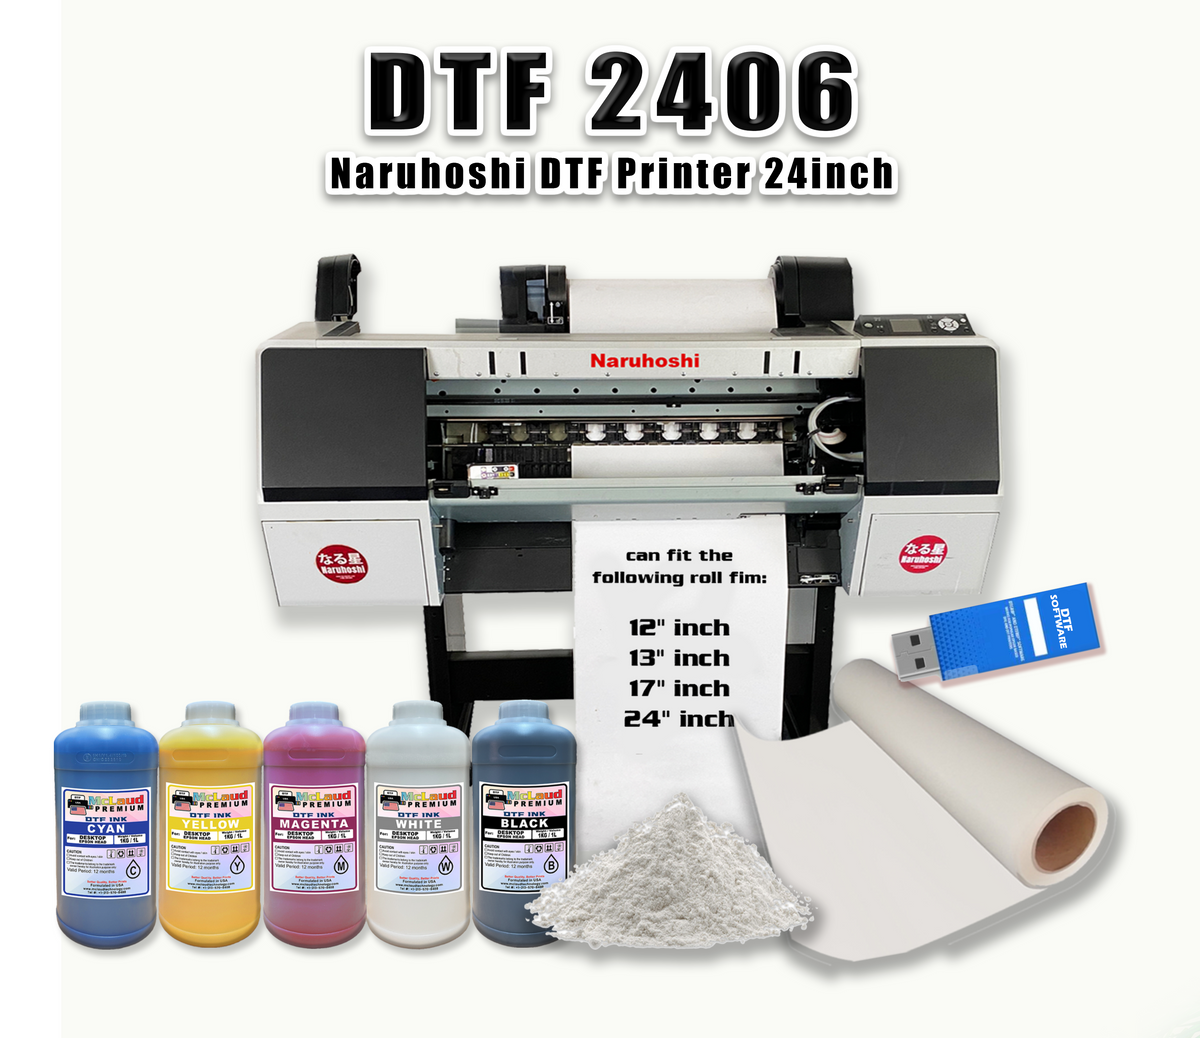 2 by 2 Promo: 2 Naruhoshi DTF 2406 Printer bundled with 2 PM2404